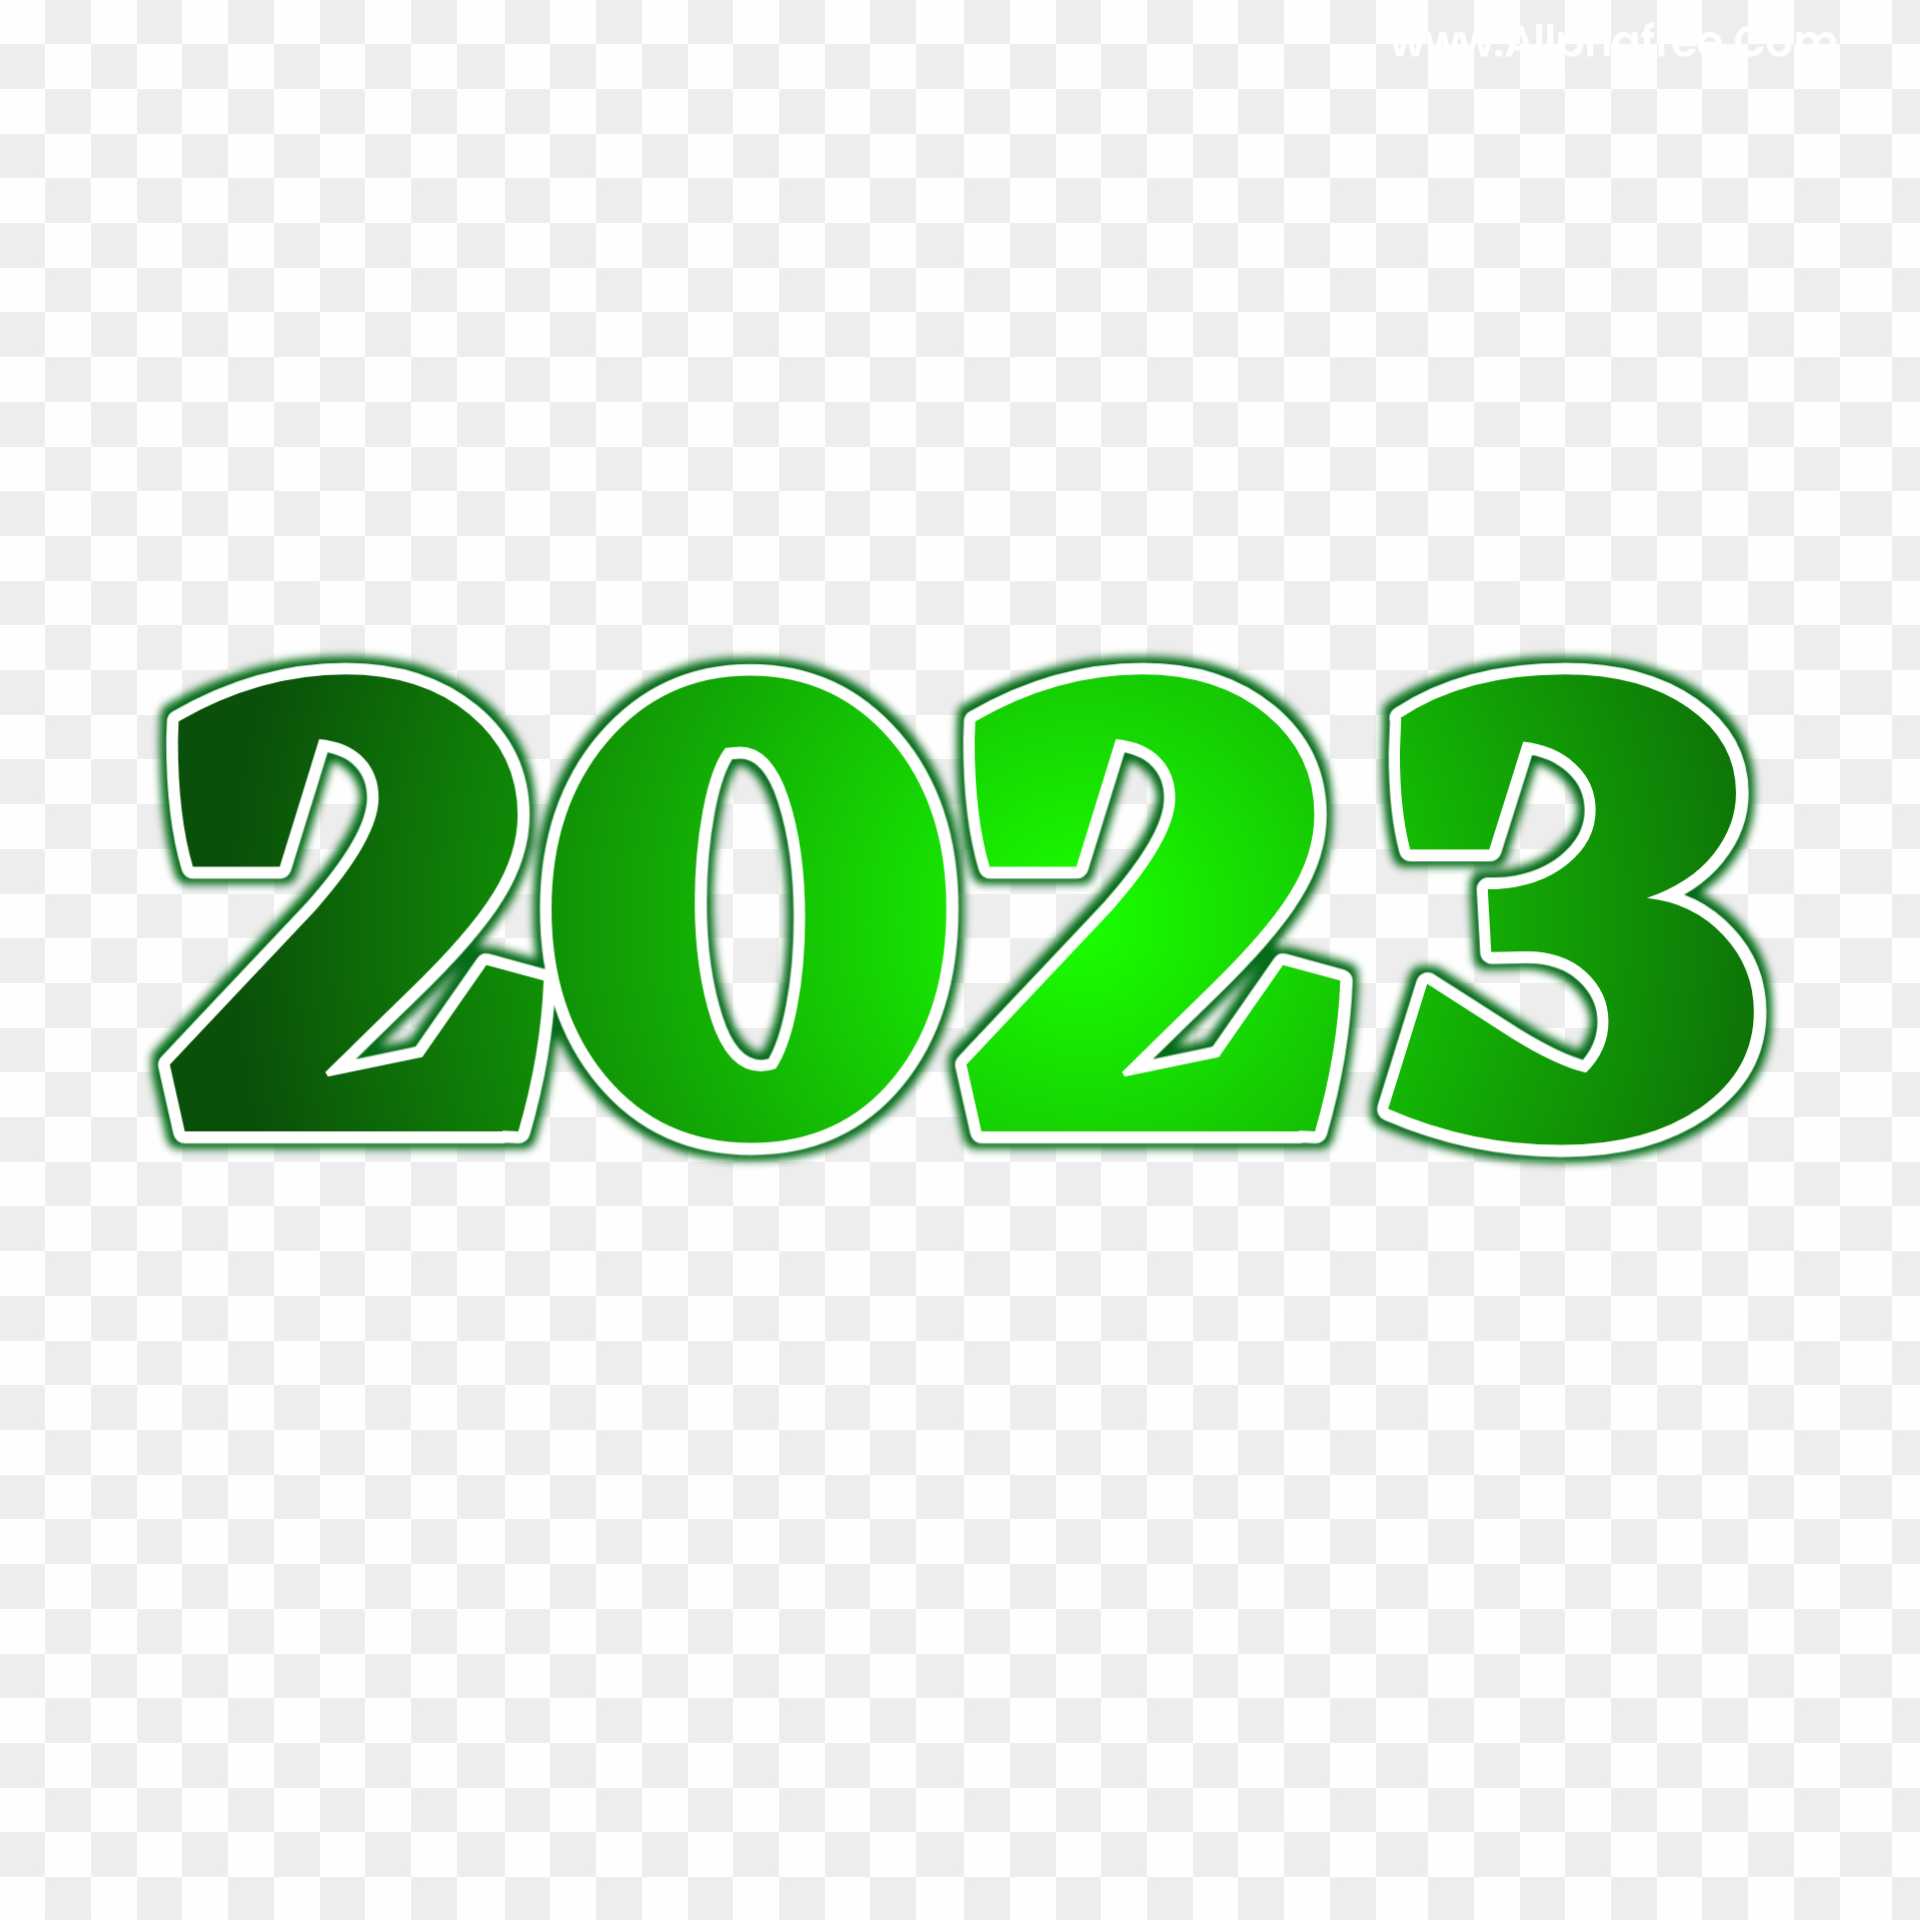 2023 text PNG transparent image download 